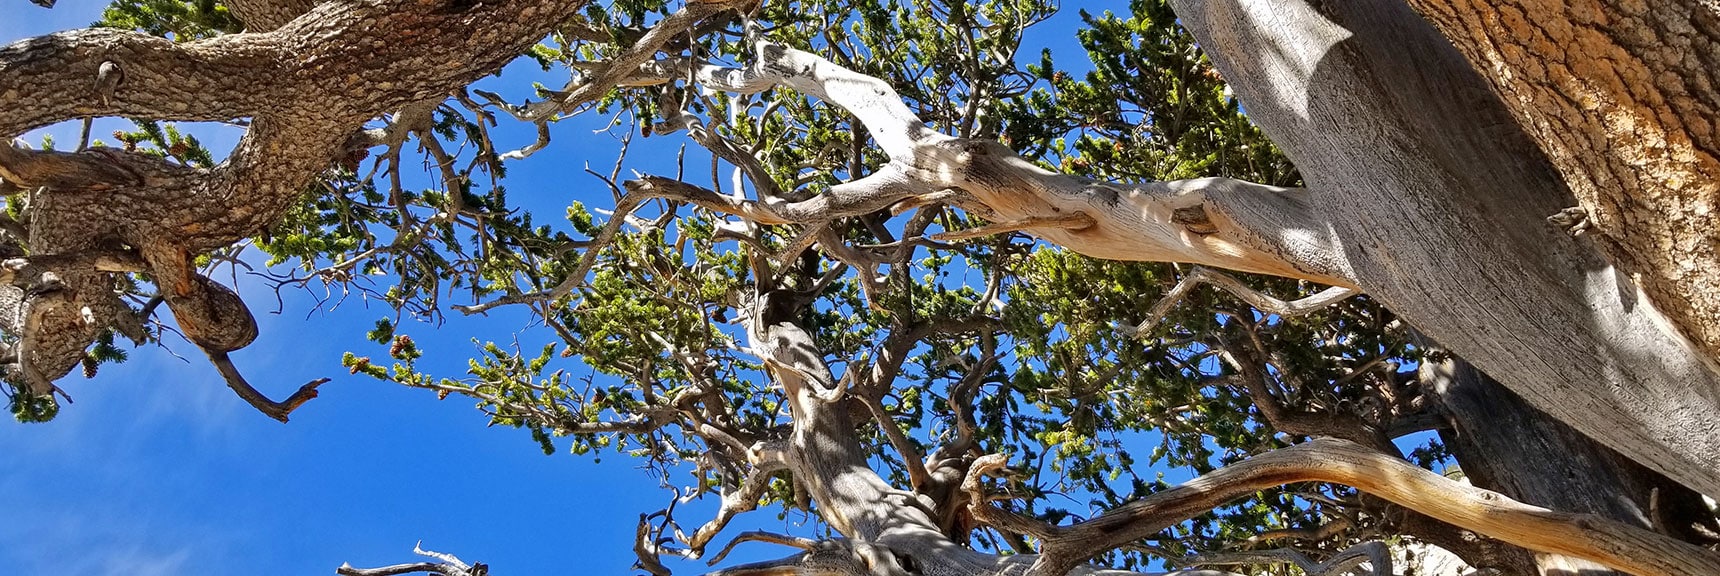 3000 year-old Raintree's Canopy | Mummy Mountain's Knees | Mt. Charleston Wilderness, Nevada 012